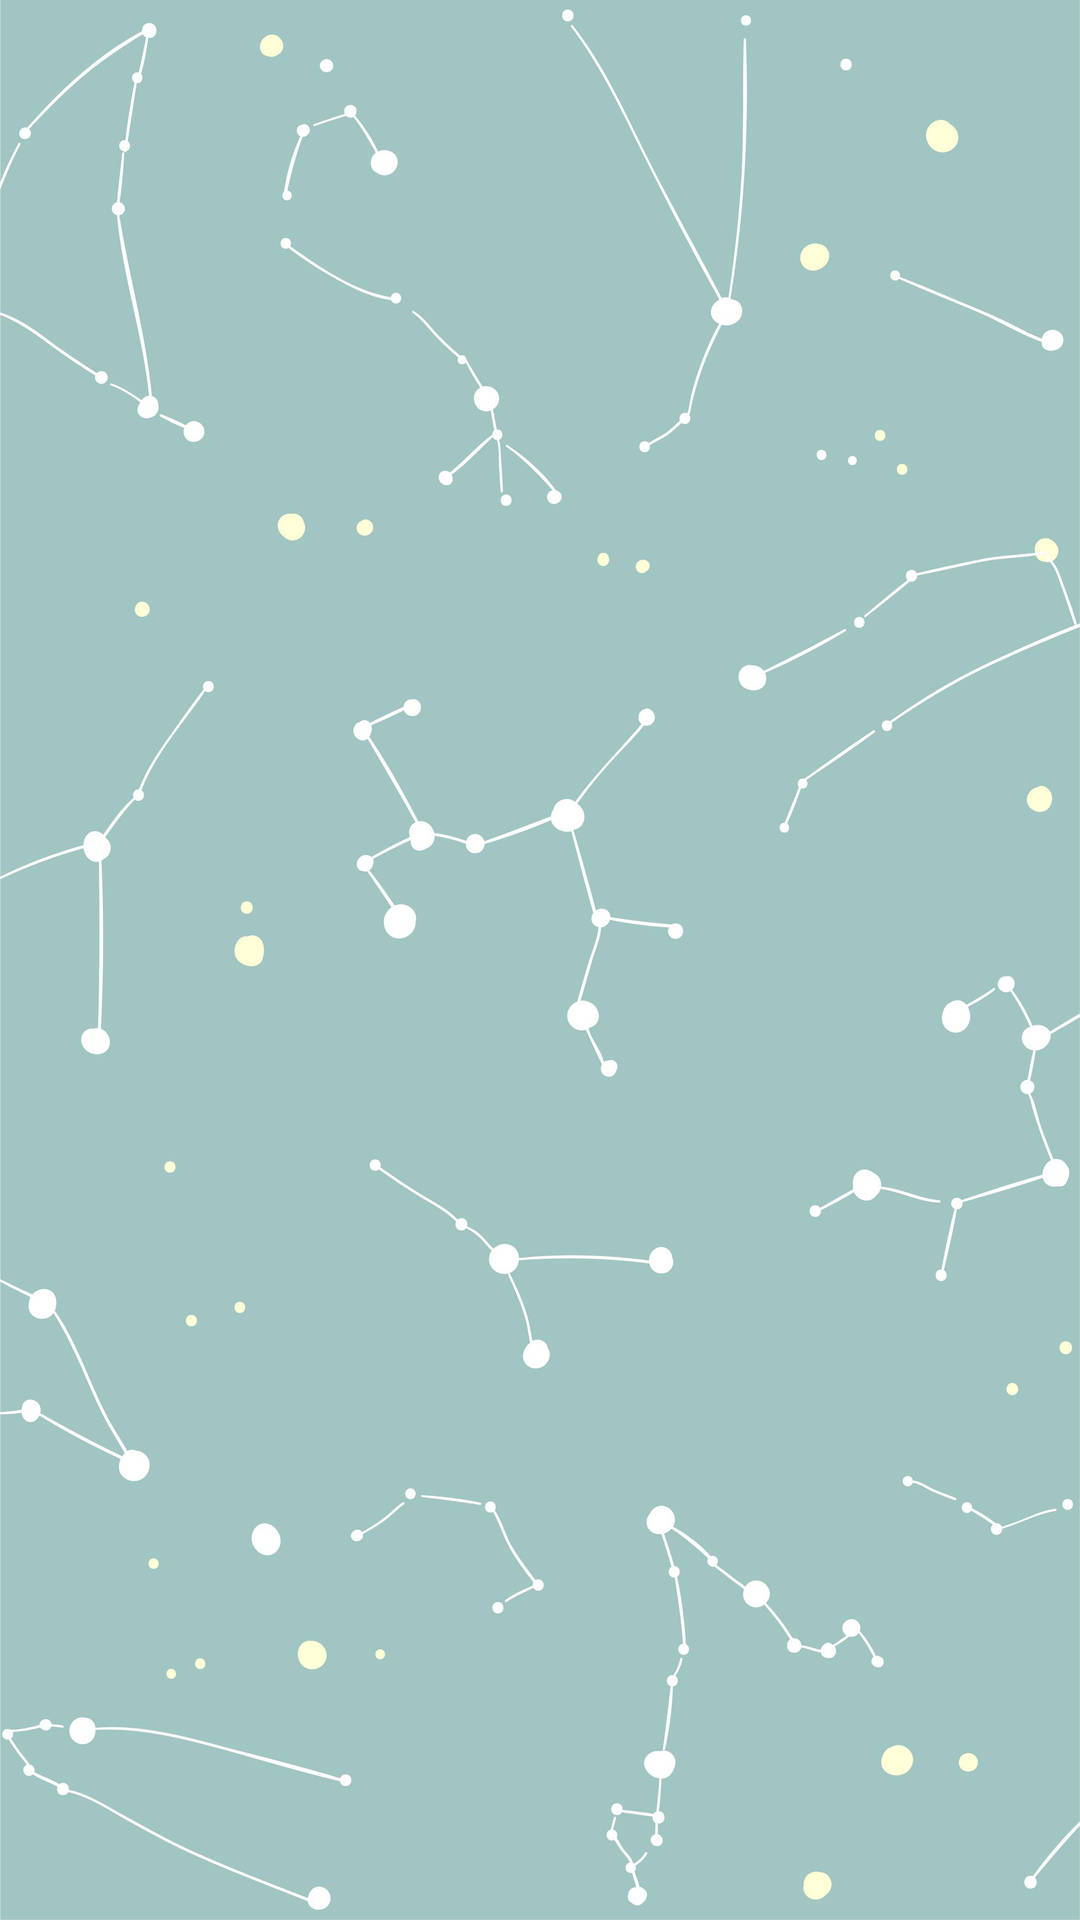 Mint Green Aesthetic Constellation Wallpaper